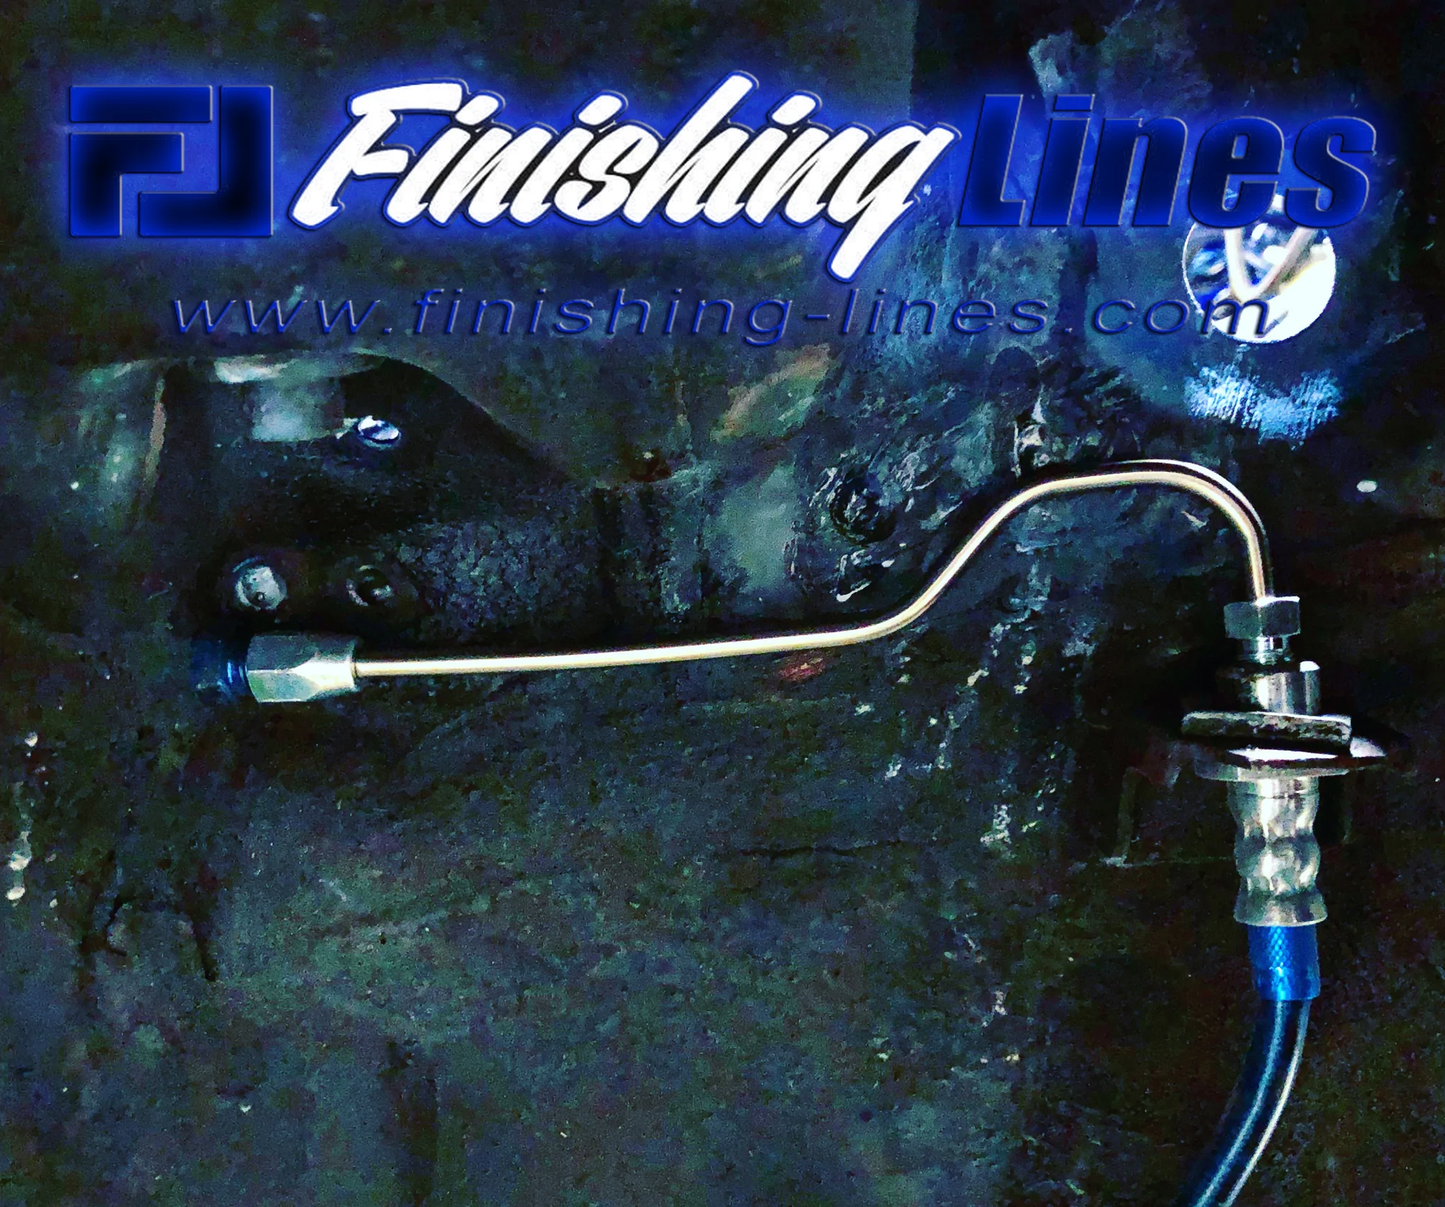 Finishing Lines - EG Full tuck with Inline Staging Brake Provision for FL or Wilwood Hand Brake